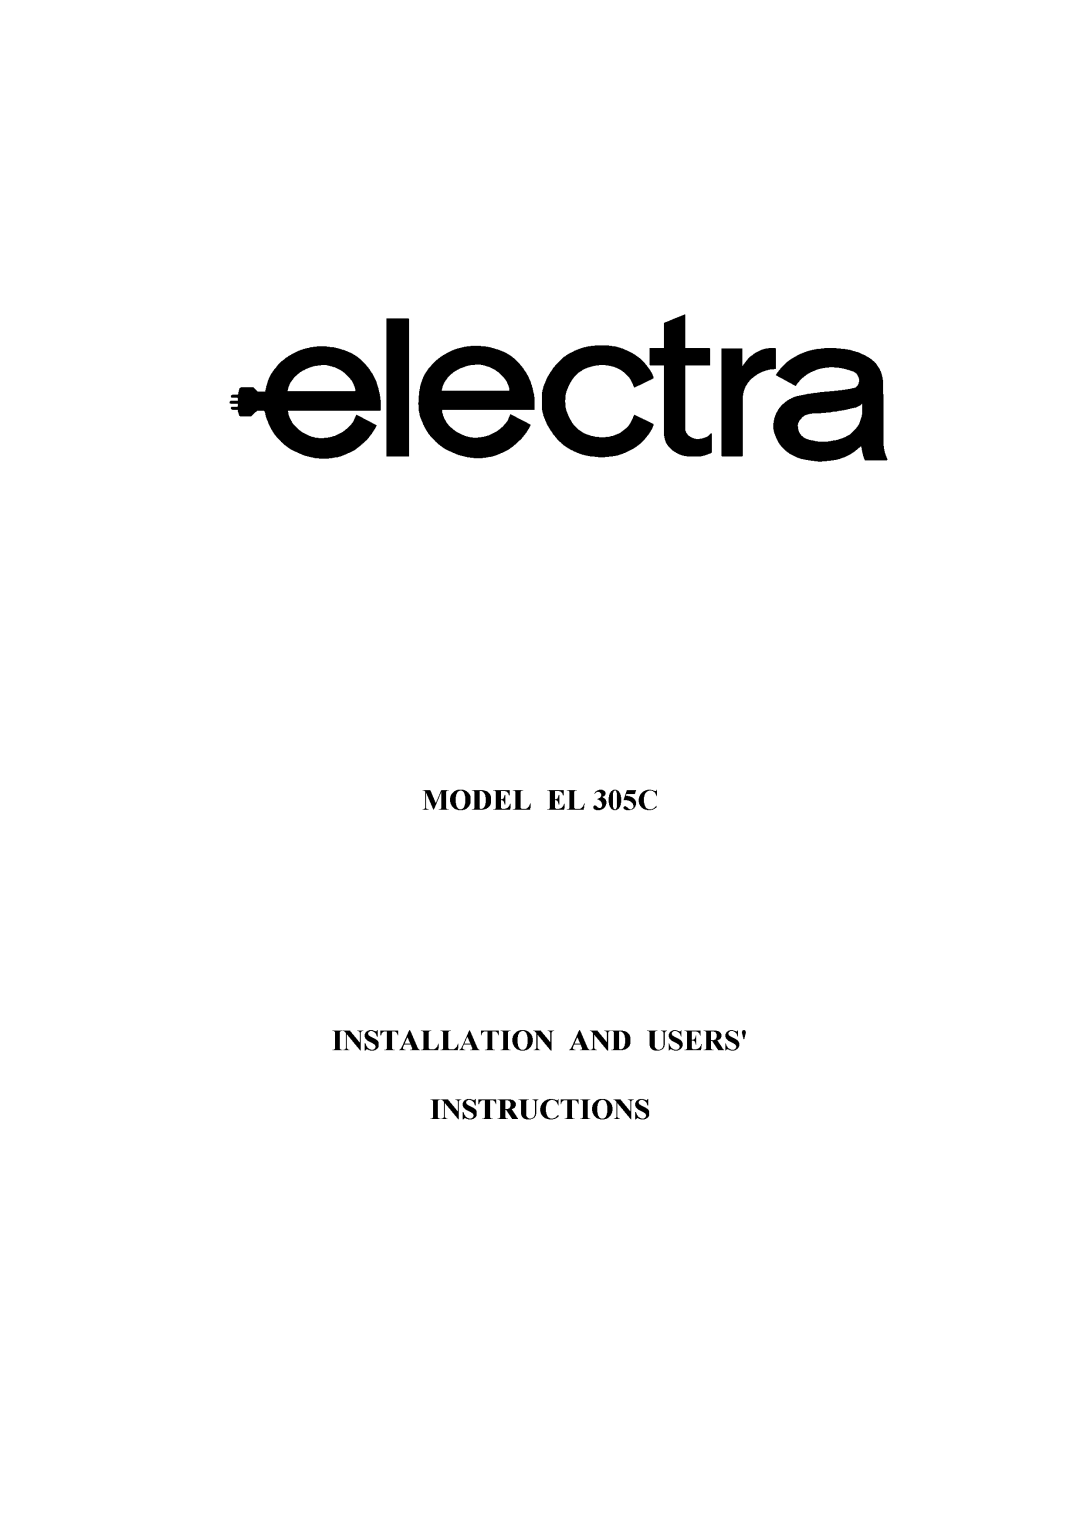 Electra Accessories EL 305C manual INSTALLAMODELINSTRUCTIONSELAND305CUSERS 